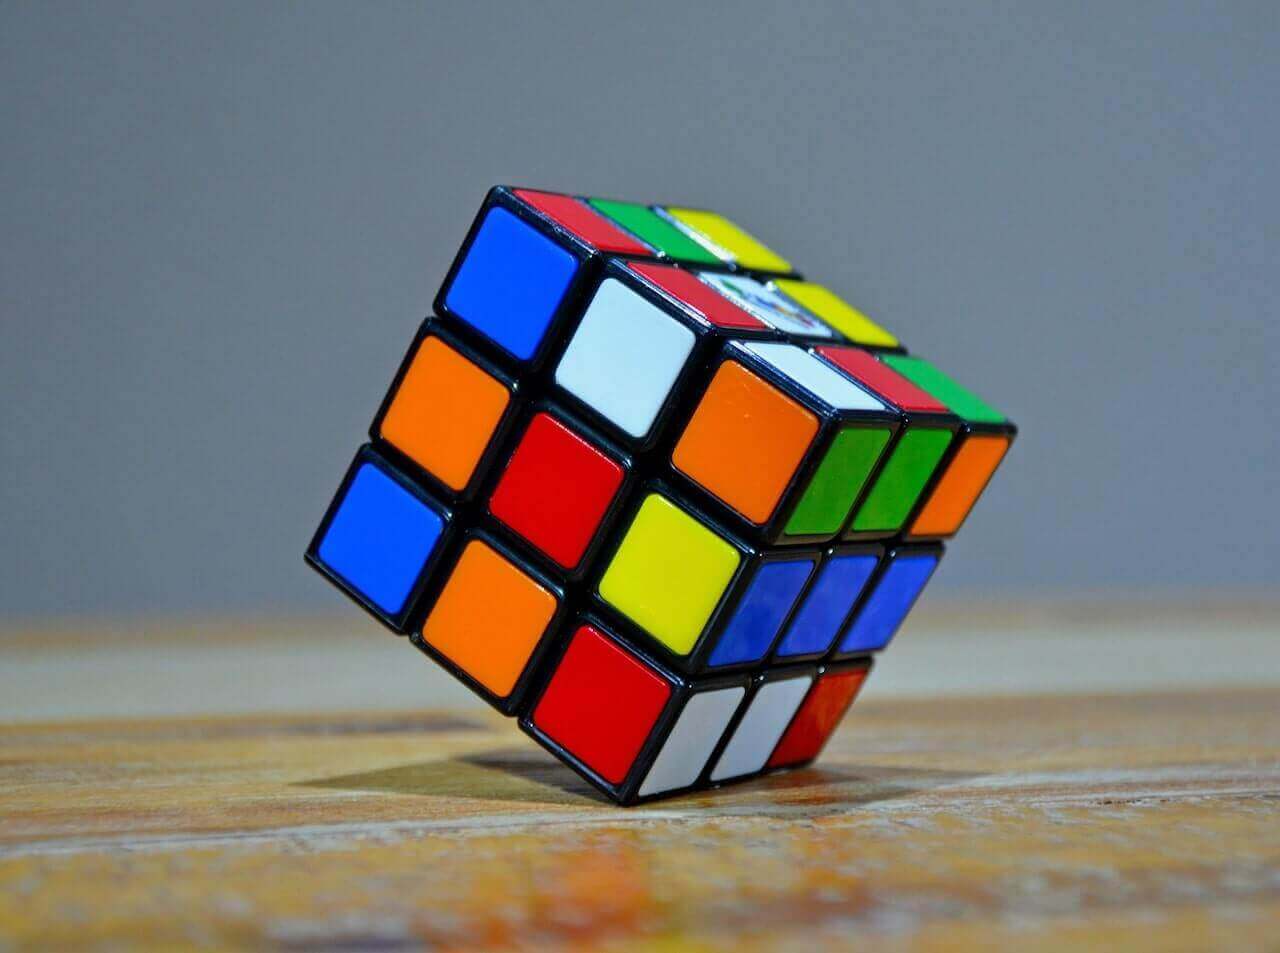 Benefits of Rubik's Cube